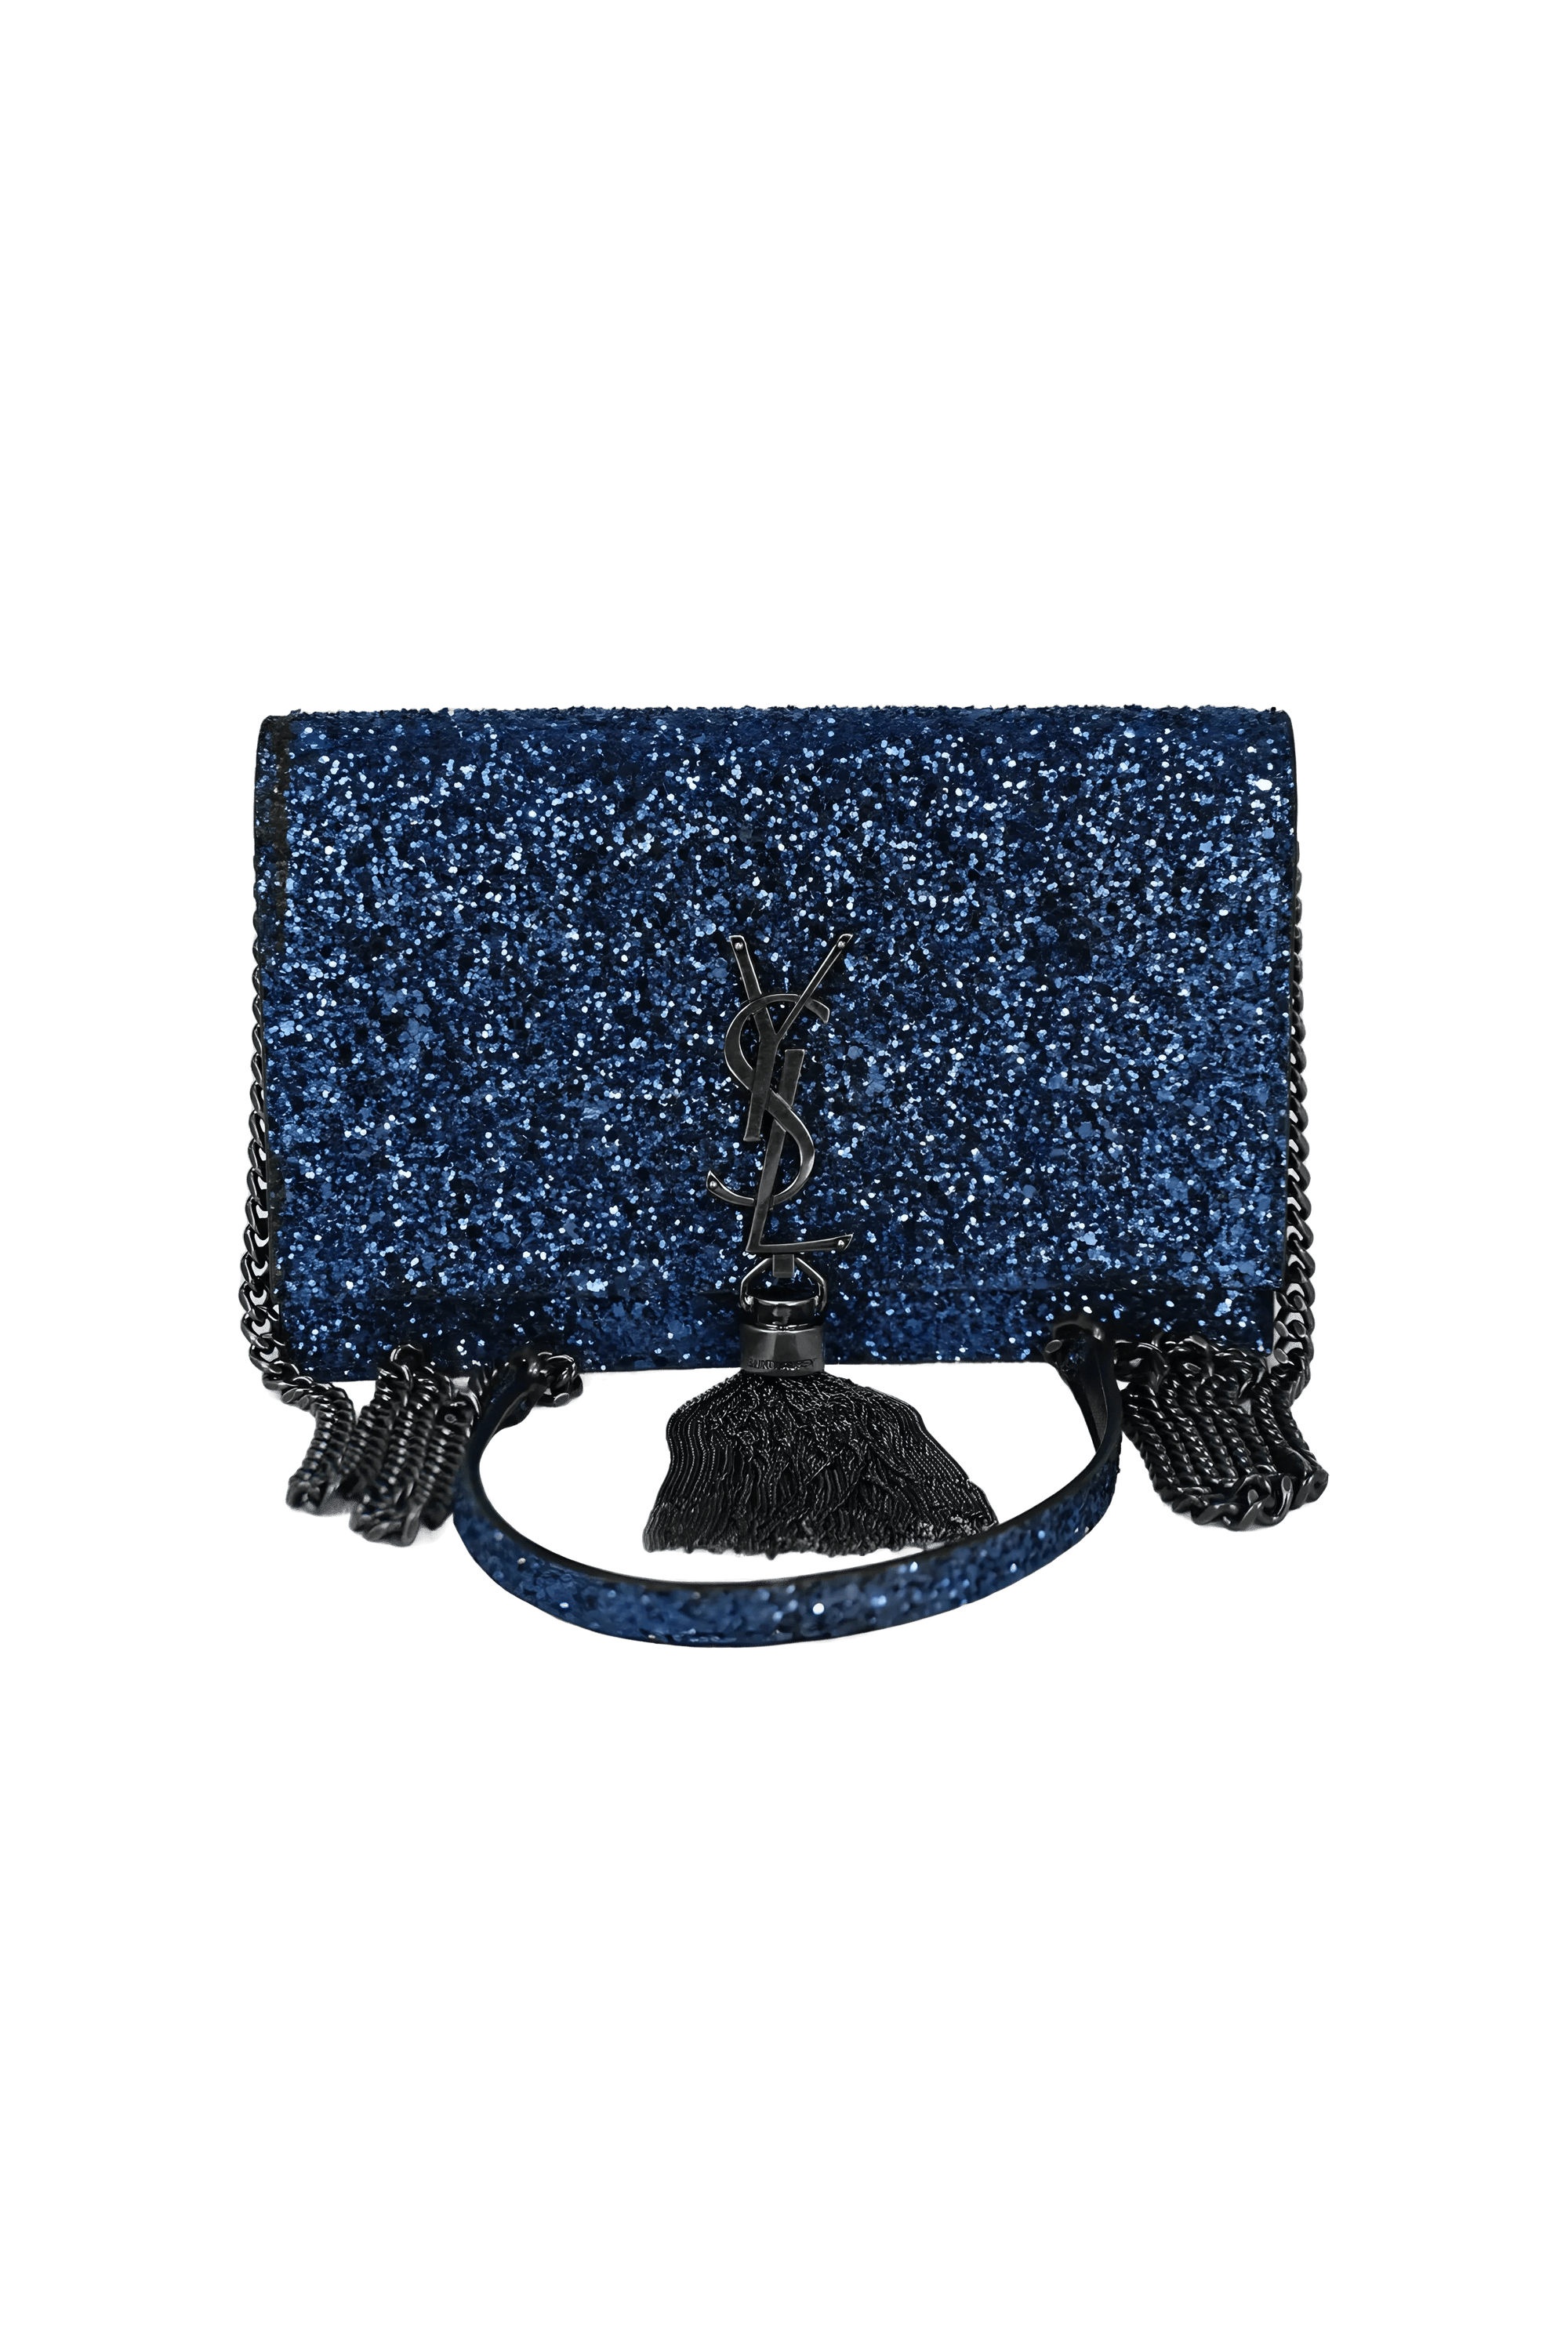 Saint Laurent Sapphire Blue Glitter Kate Wallet on a Chain Purse 2018 - Foxy Couture Carmel